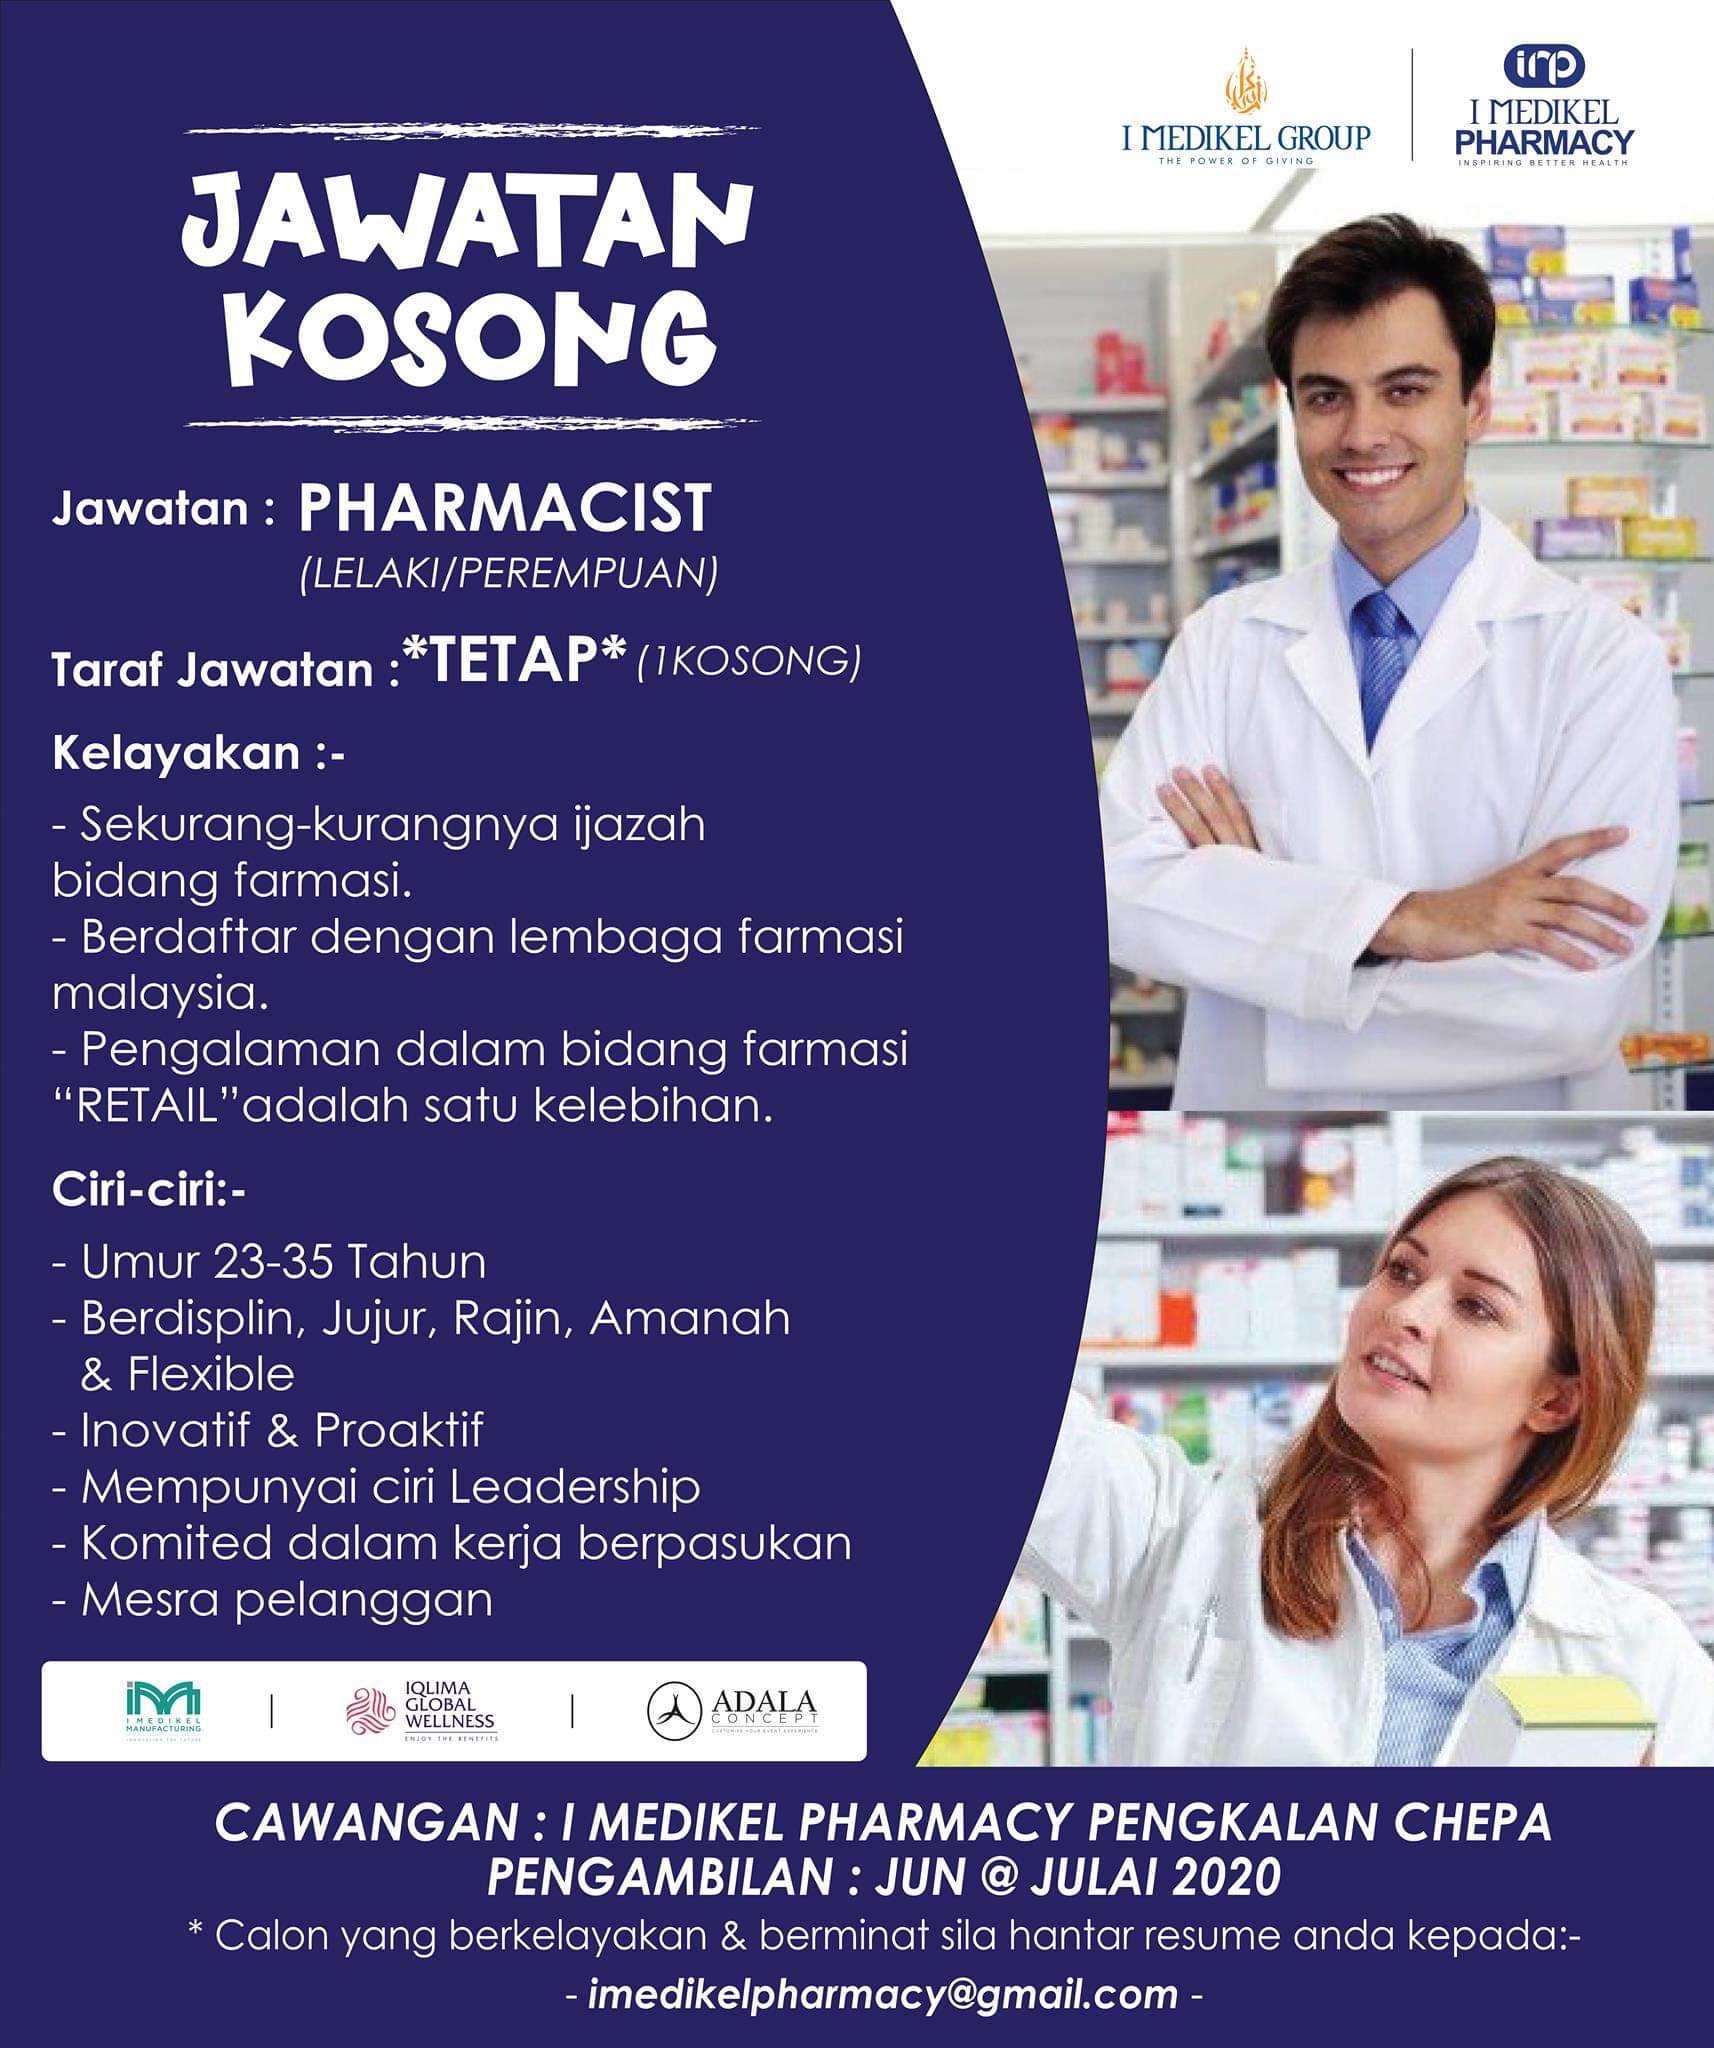 Jawatan Kosong Di I Medikel Pharmacy PC